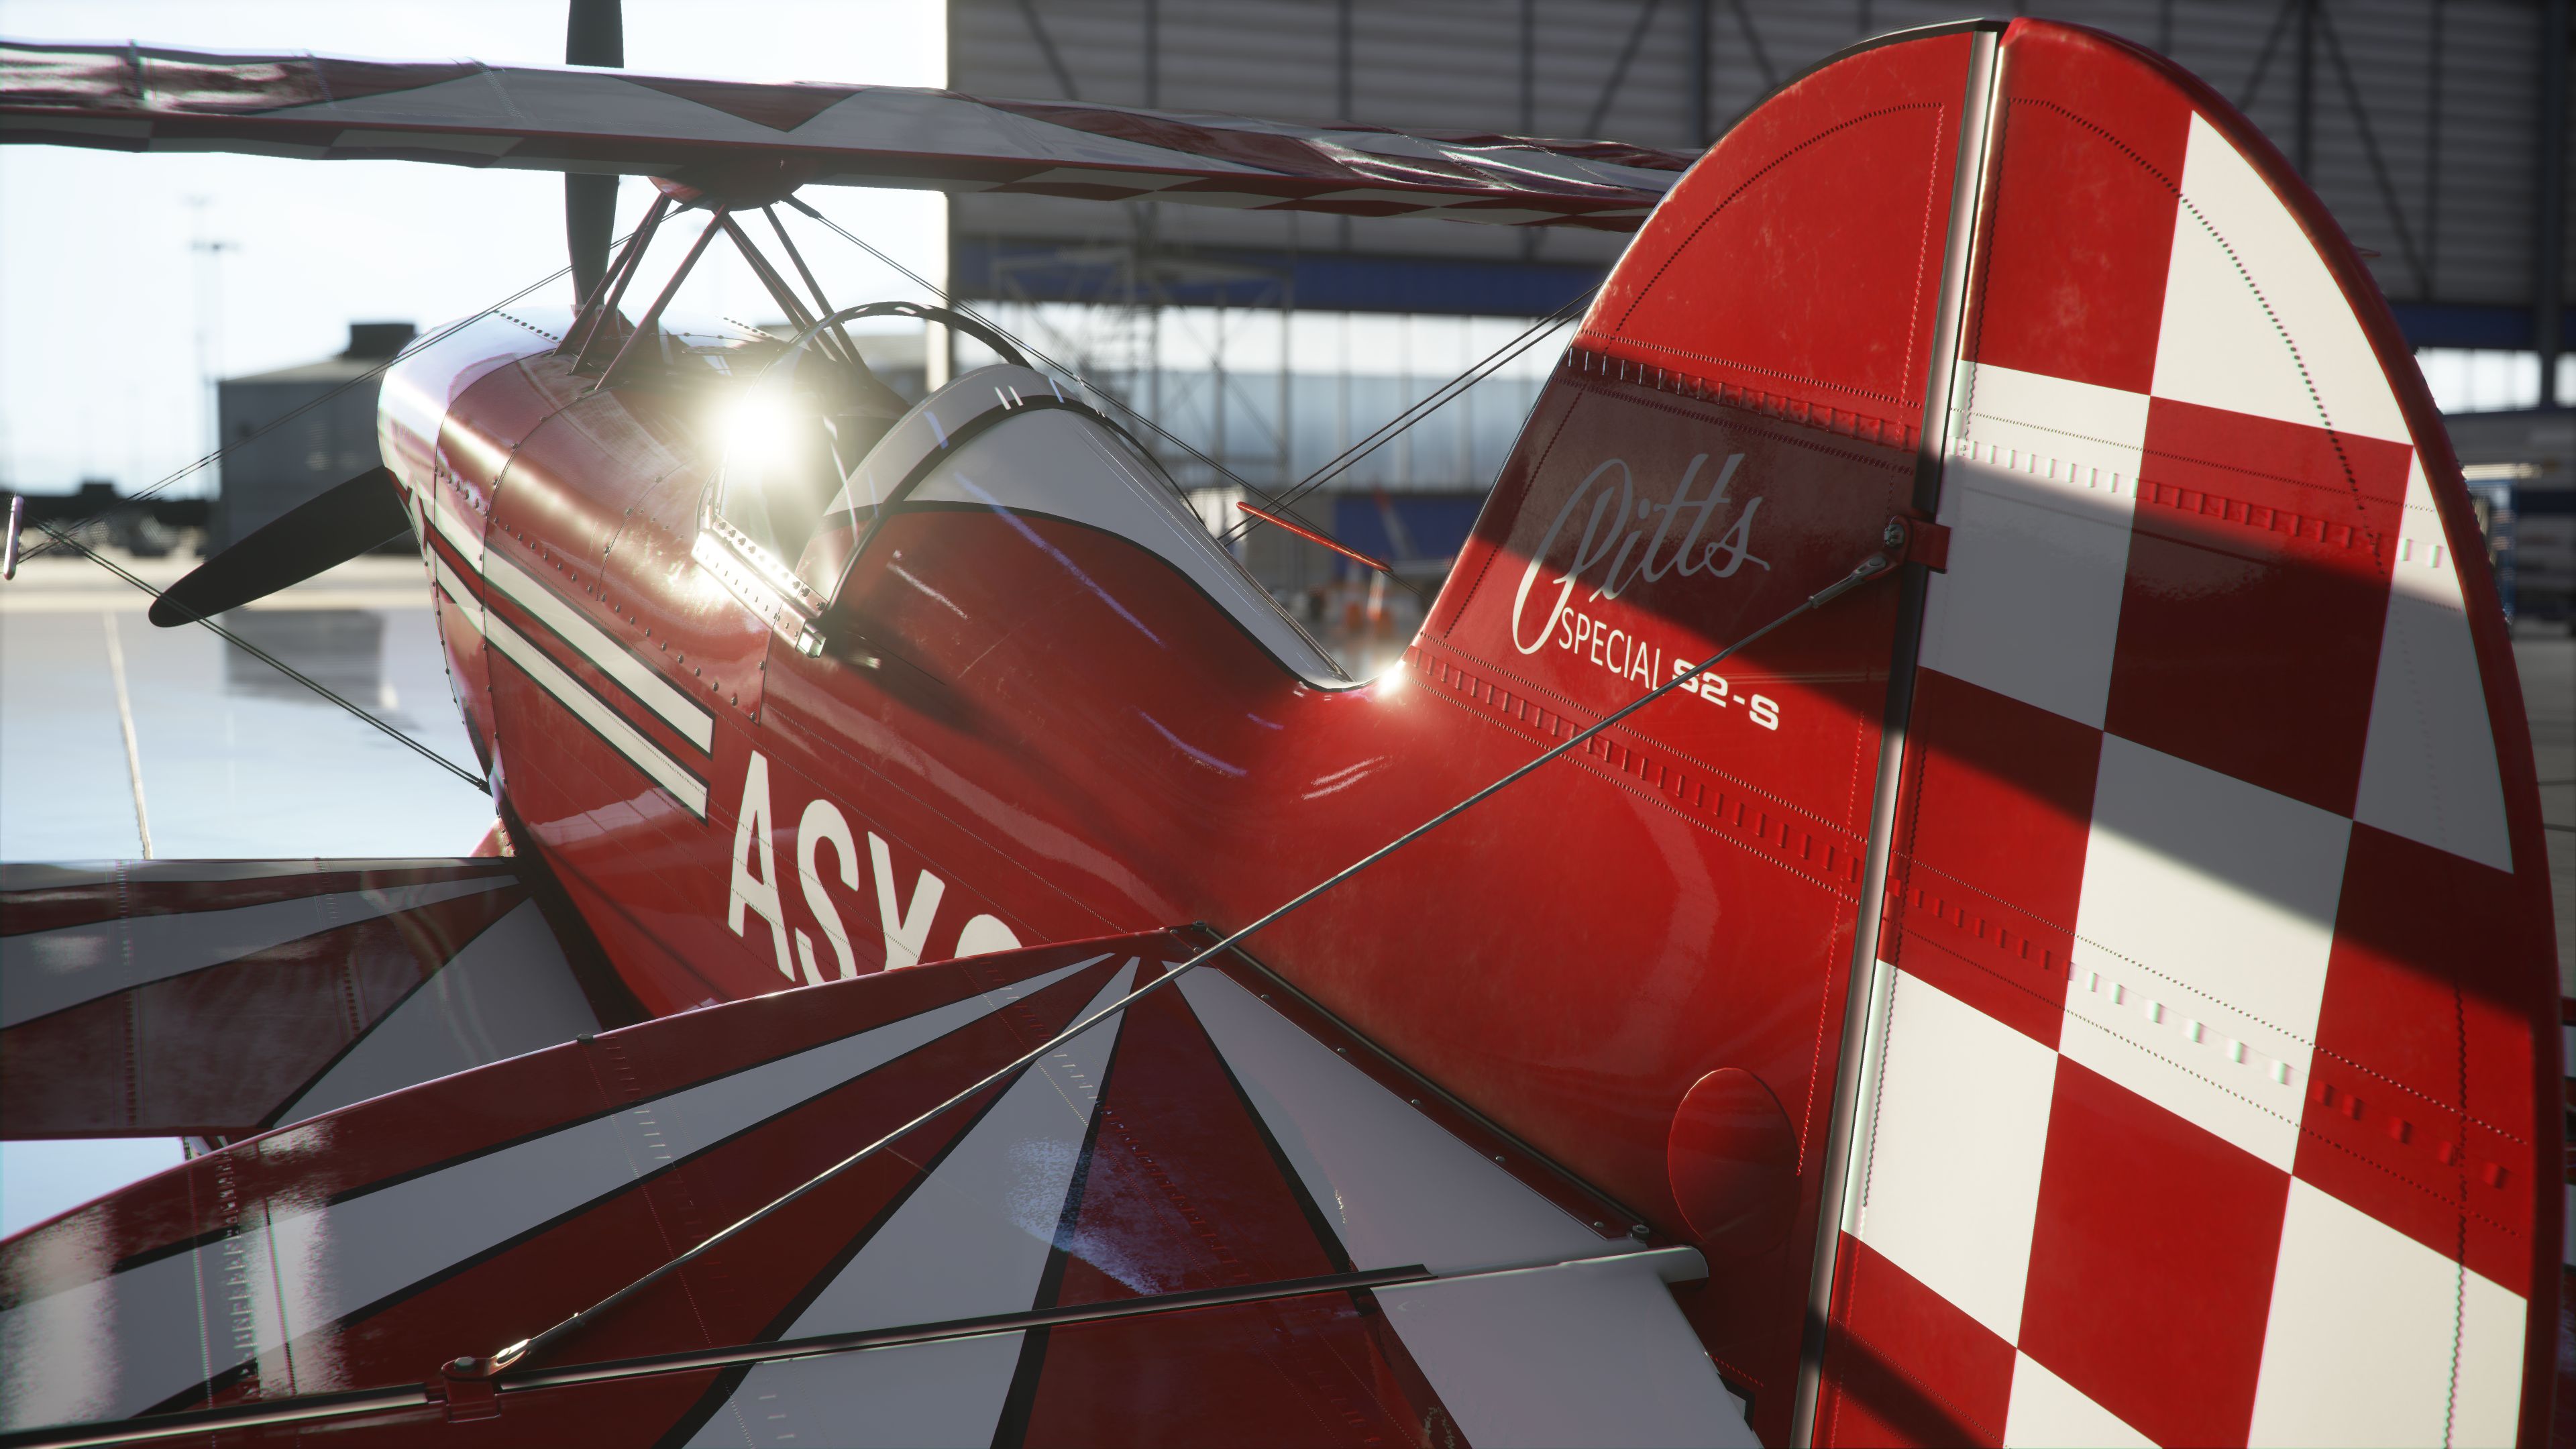 Microsoft Flight Simulator Powered by GeForce RTX 30 Series